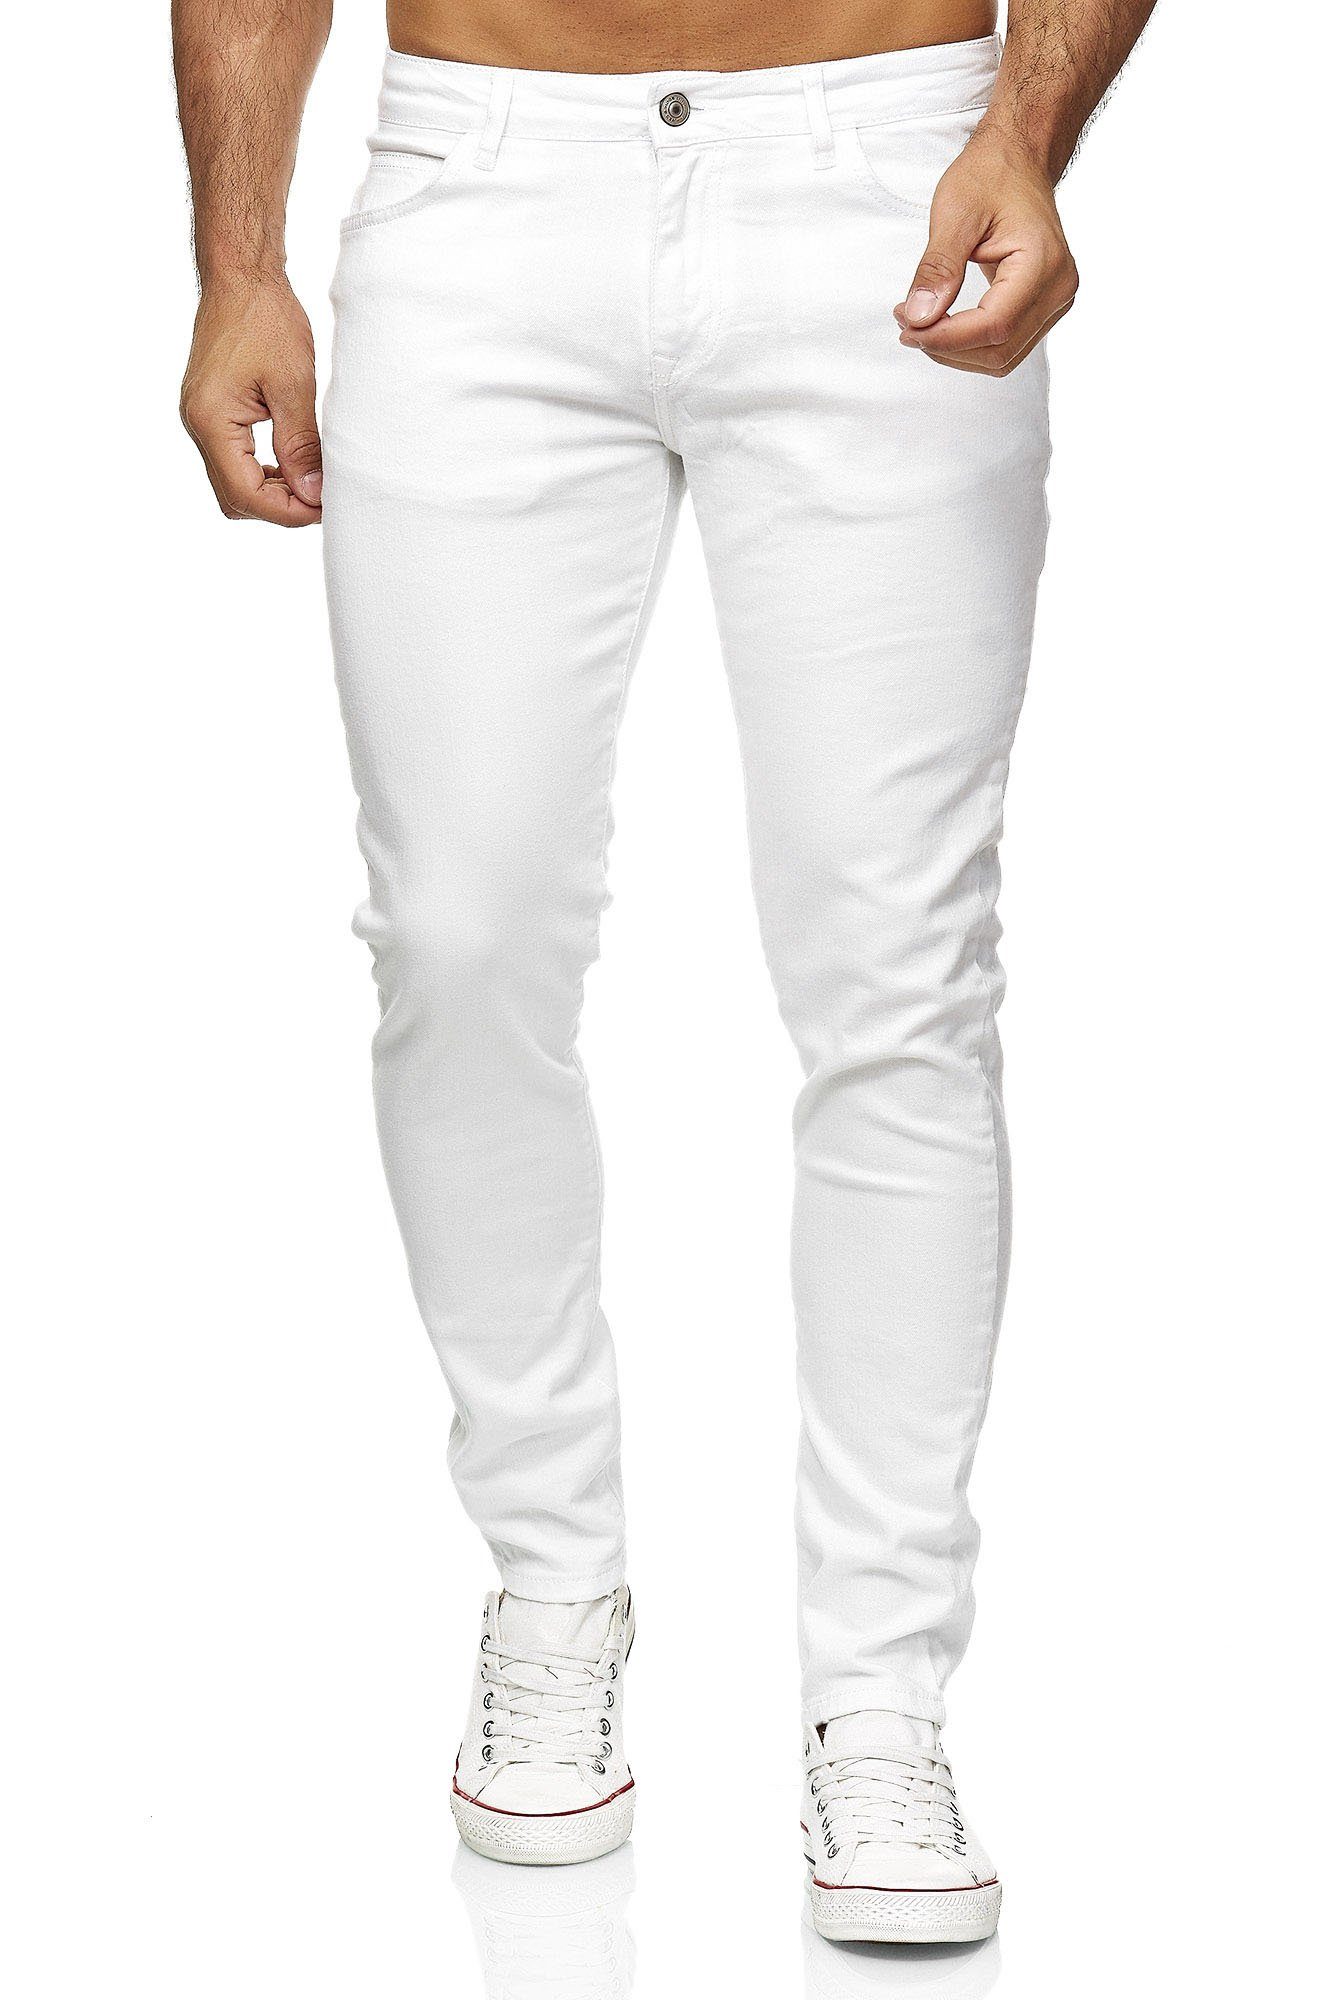 RedBridge Chinohose Premium Slim-Fit Hose Stretchkomfort Weiß